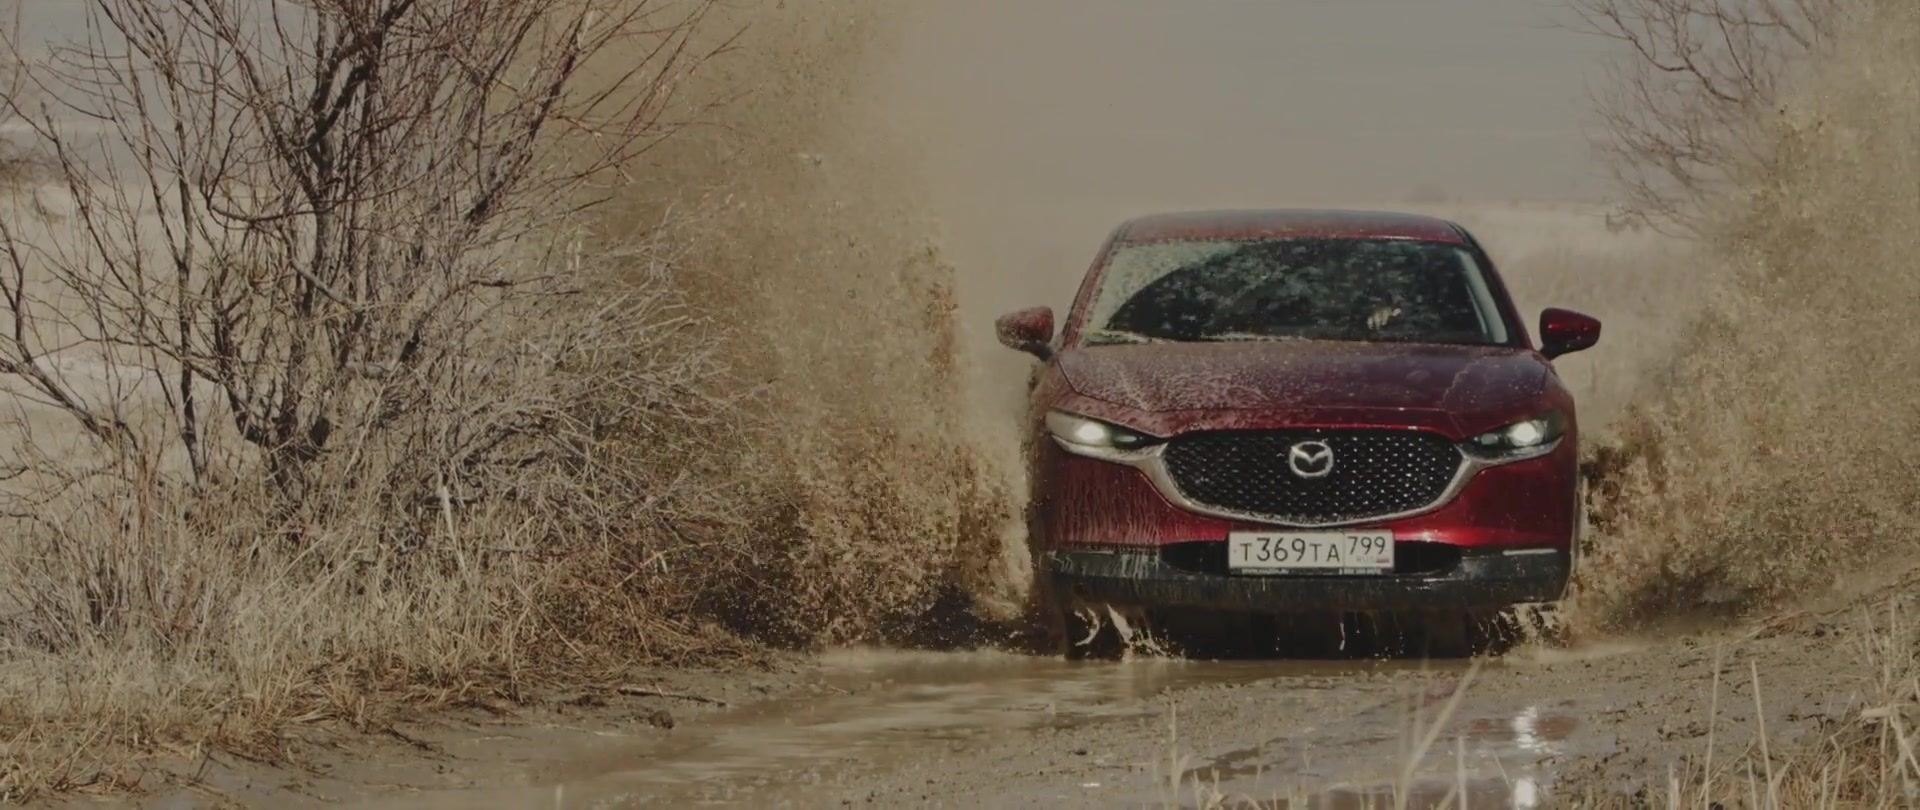 Mazda Motors UK – Epic Drive Look Back Film 2020